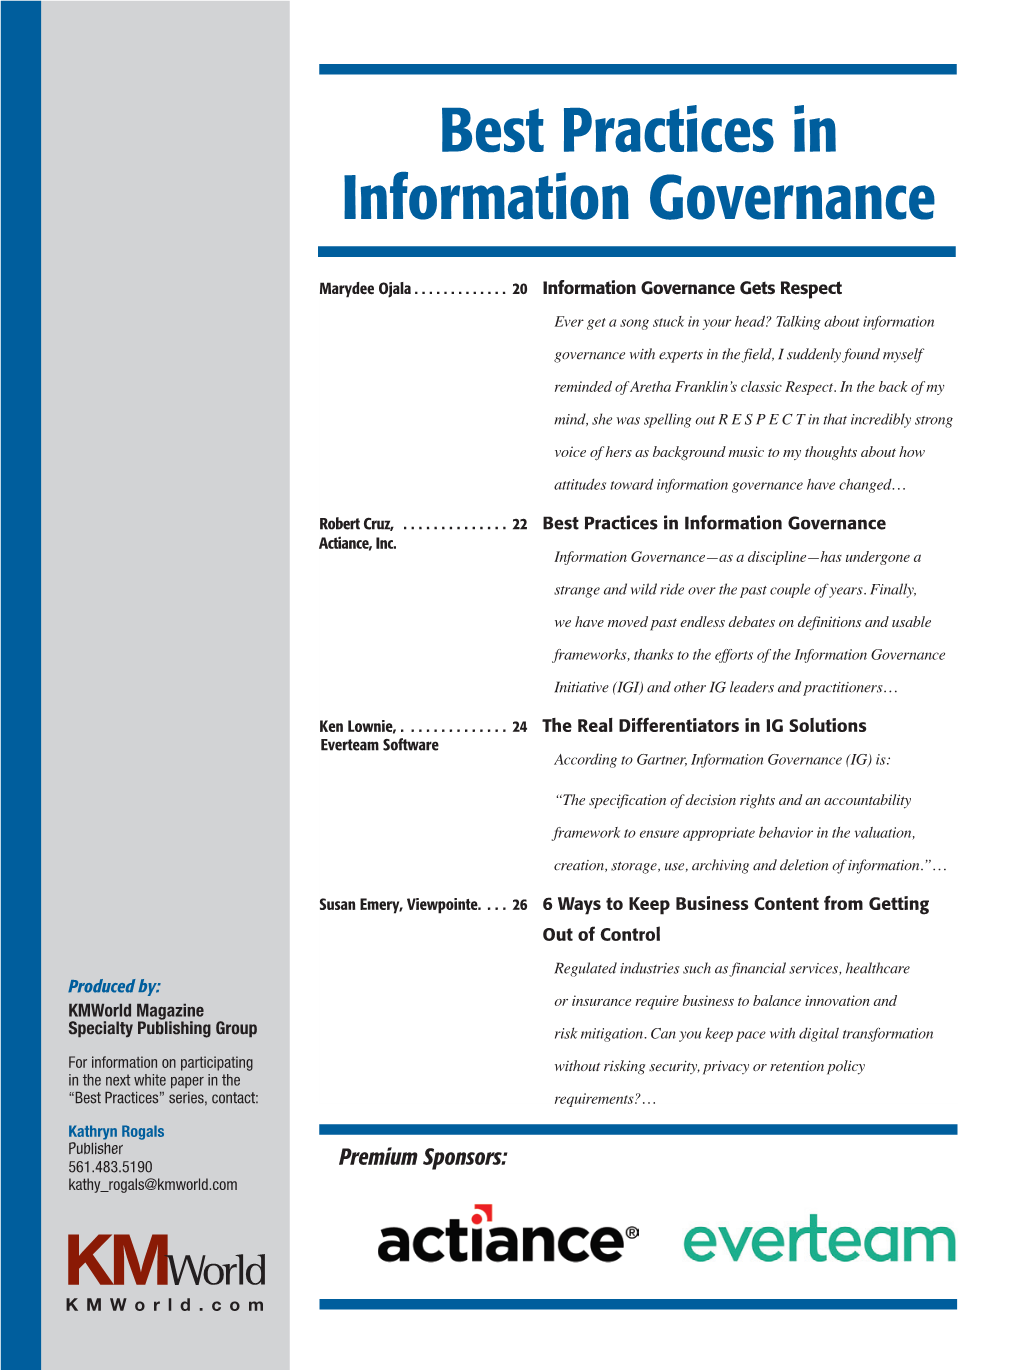 Best Practices in Information Governance